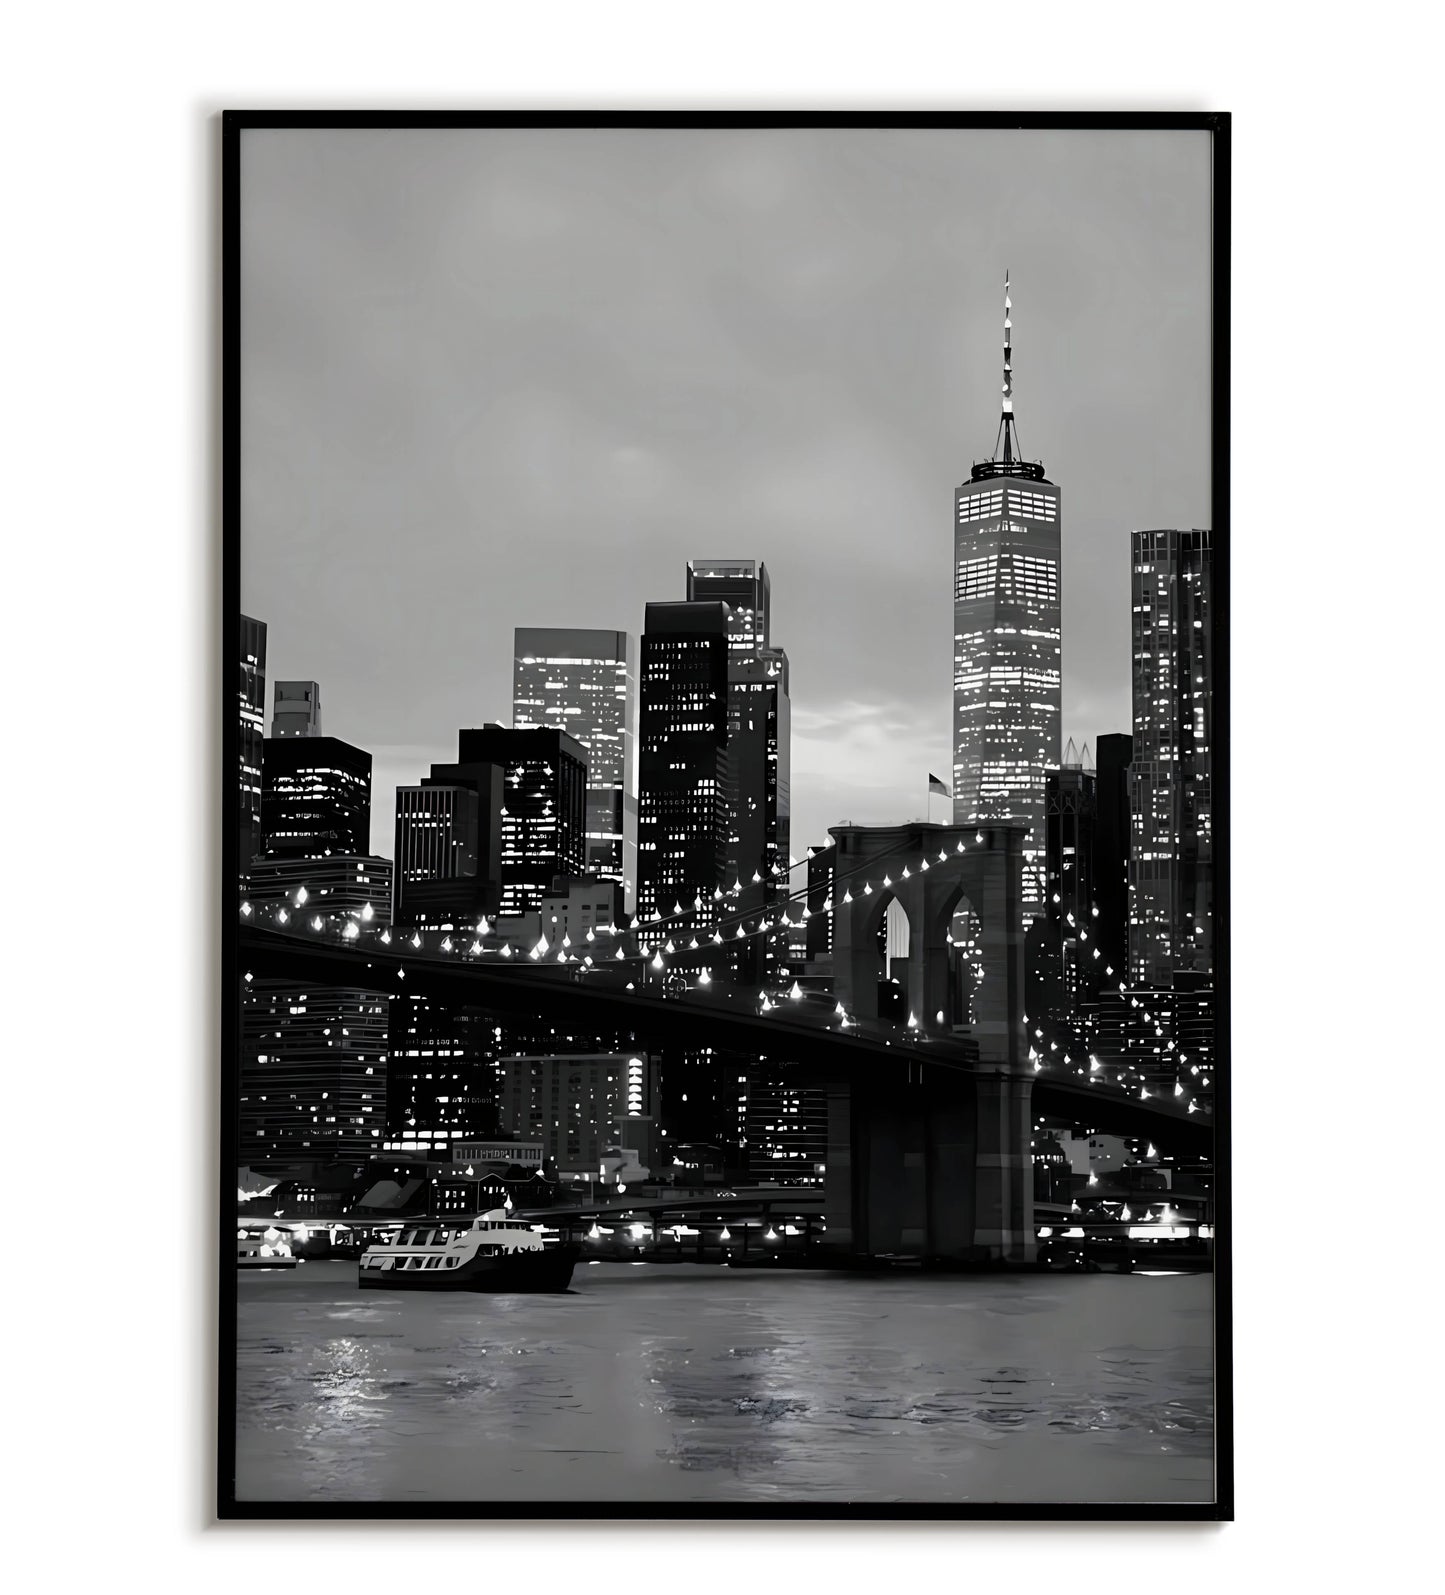 Brooklyn Bridge Black & White poster. Classic photograph of the Brooklyn Bridge.